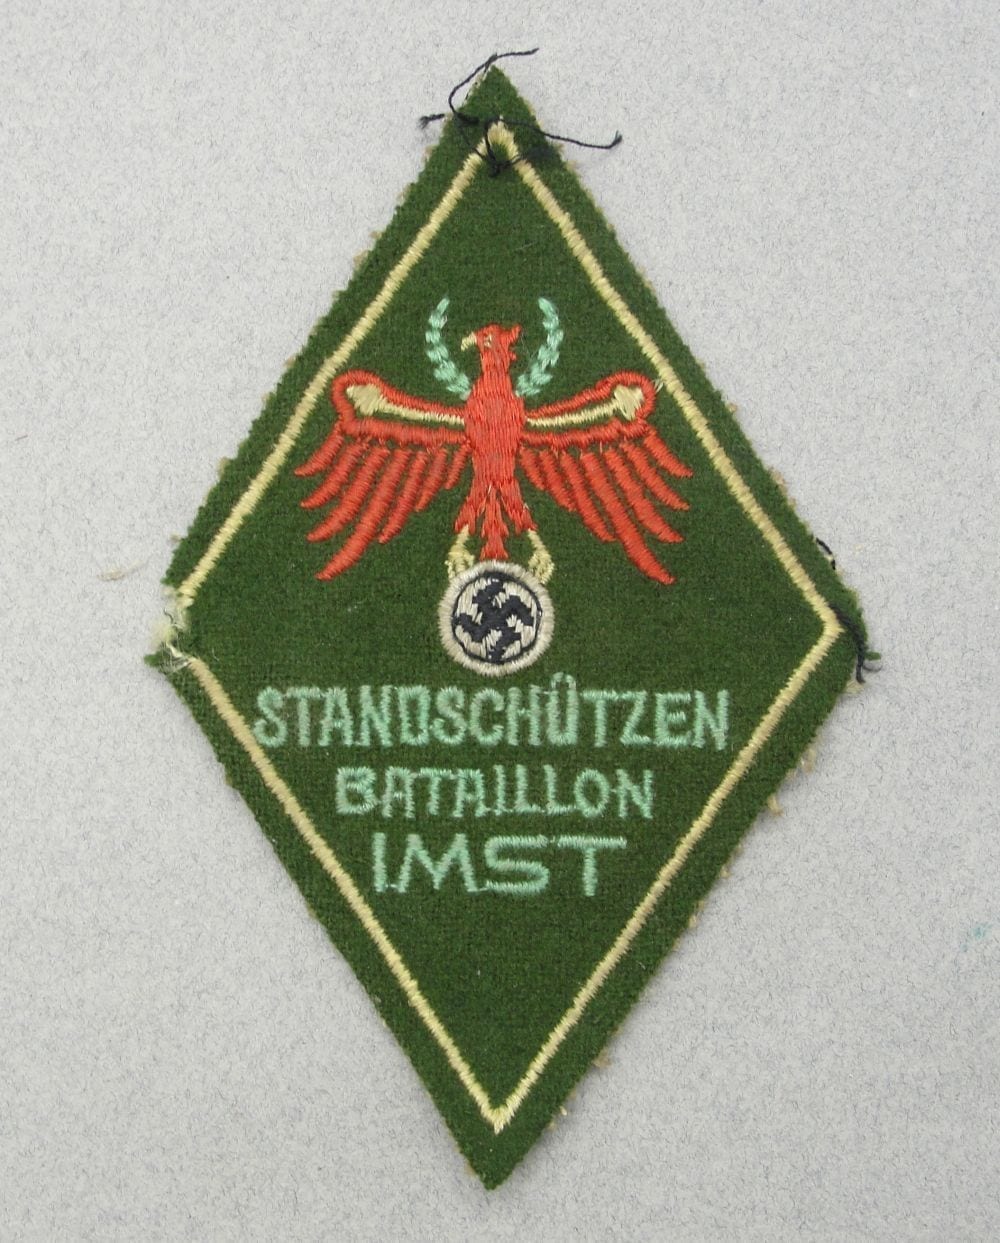 STANDSCHÜTZEN BATAILLON IMST Self Defense Unit Sleeve Shield